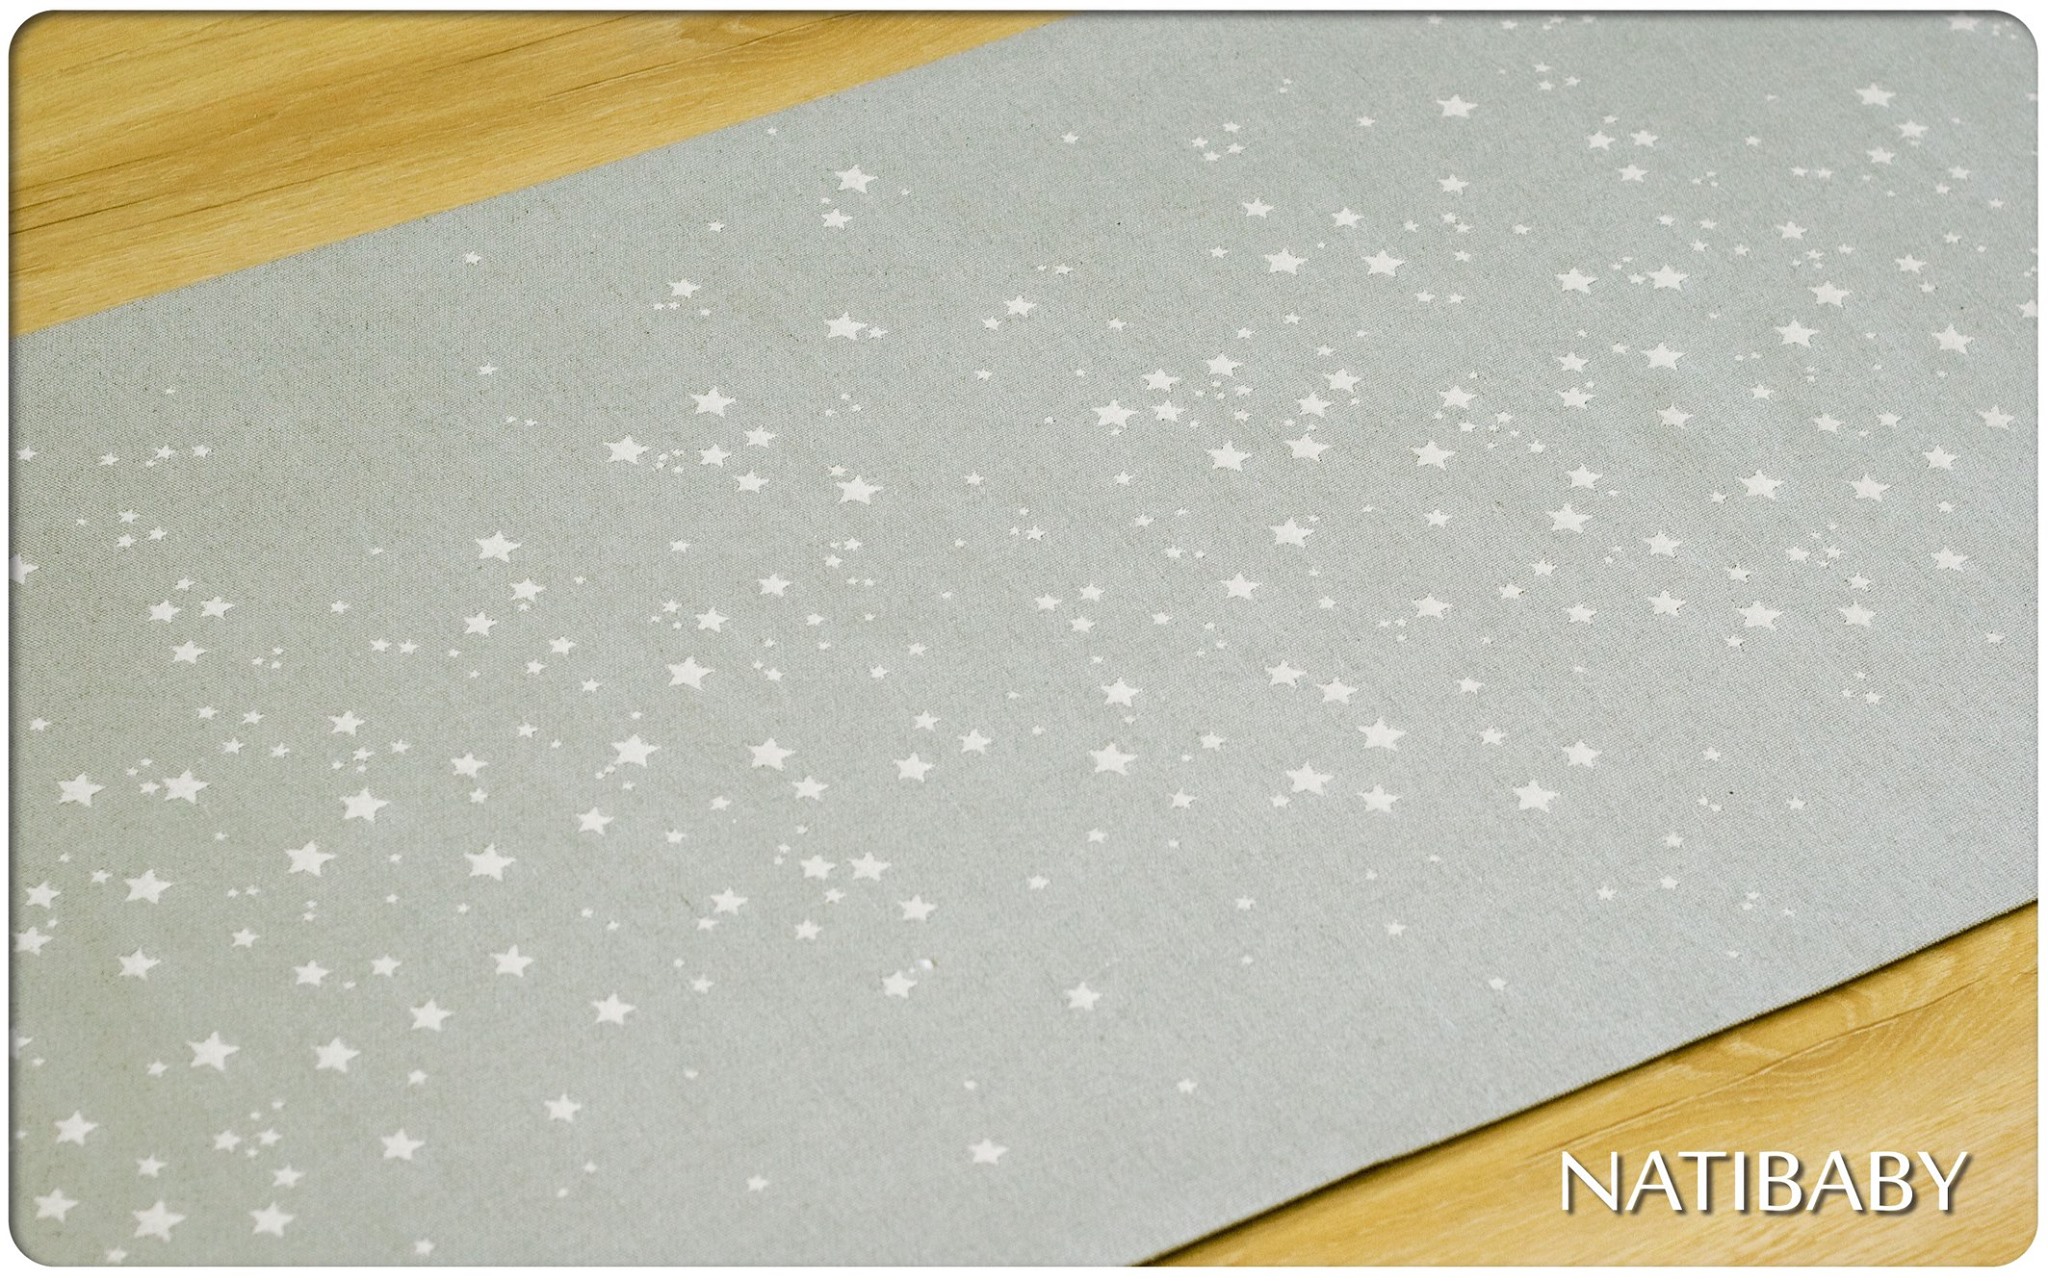 Natibaby Stardust Shades of Grey Light Wrap (merino, linen) Image